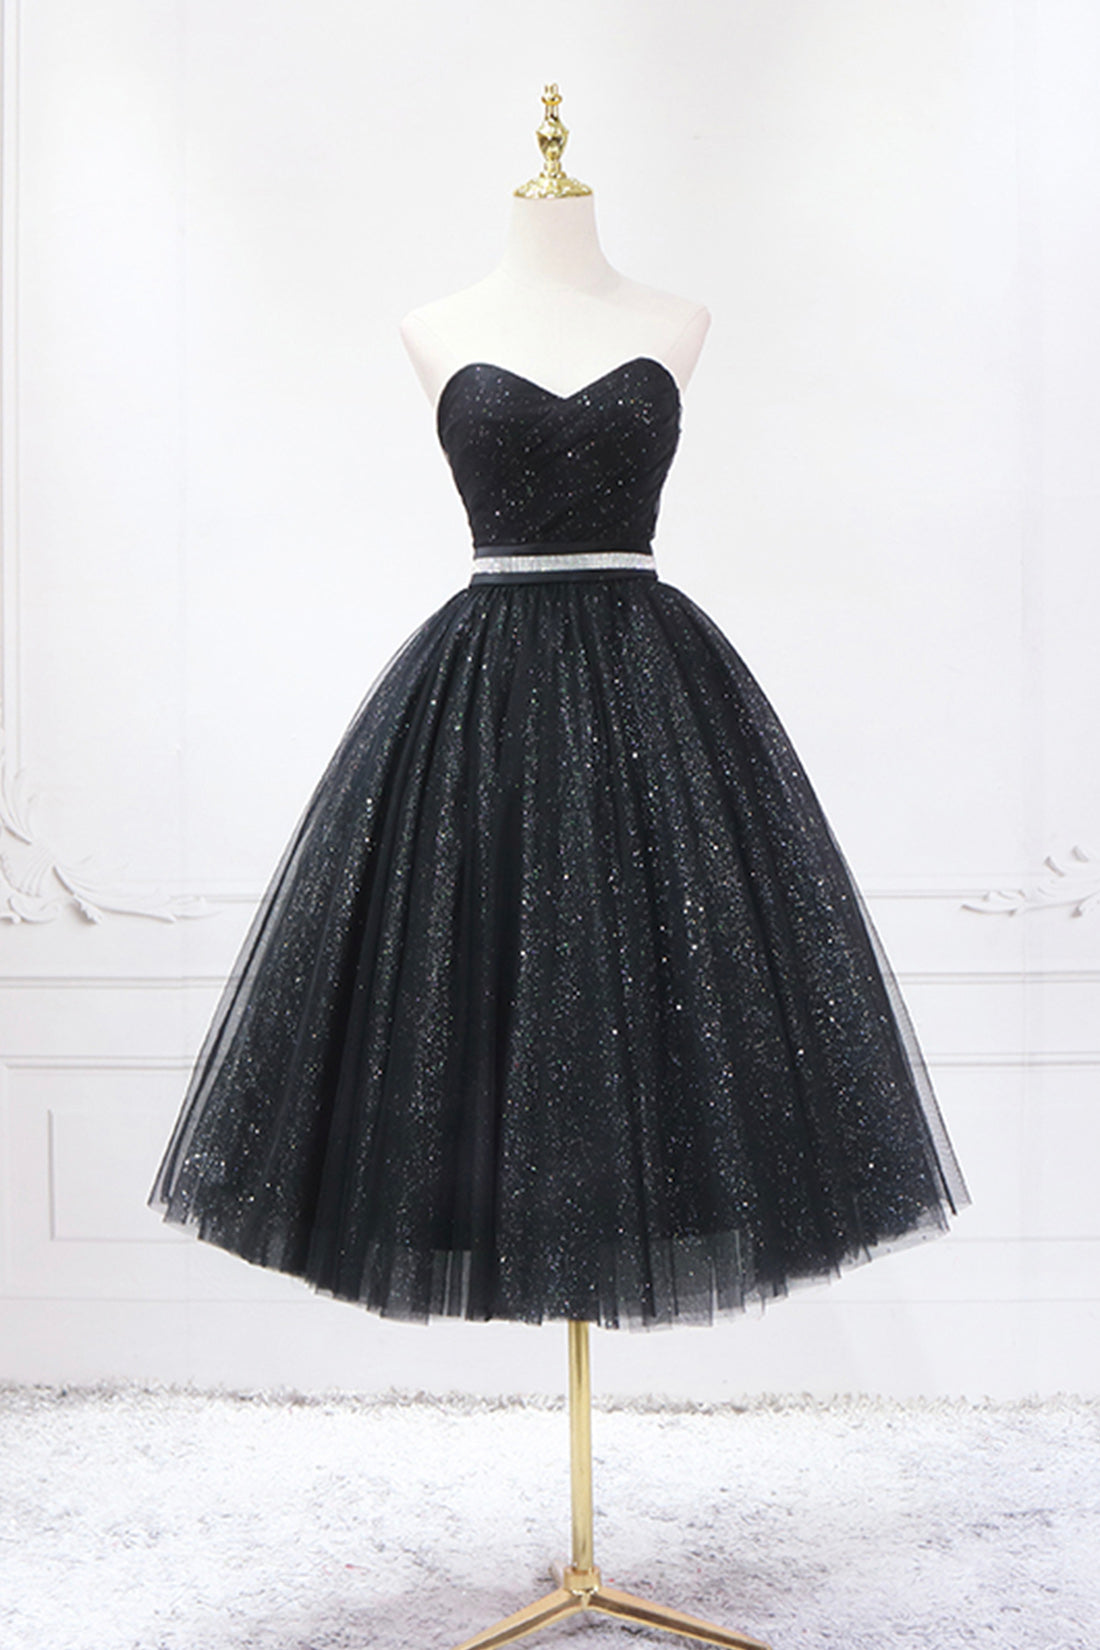 White Dress, Black Strapless Shiny Tulle Tea Length Prom Dress, Black A-Line Homecoming Dress